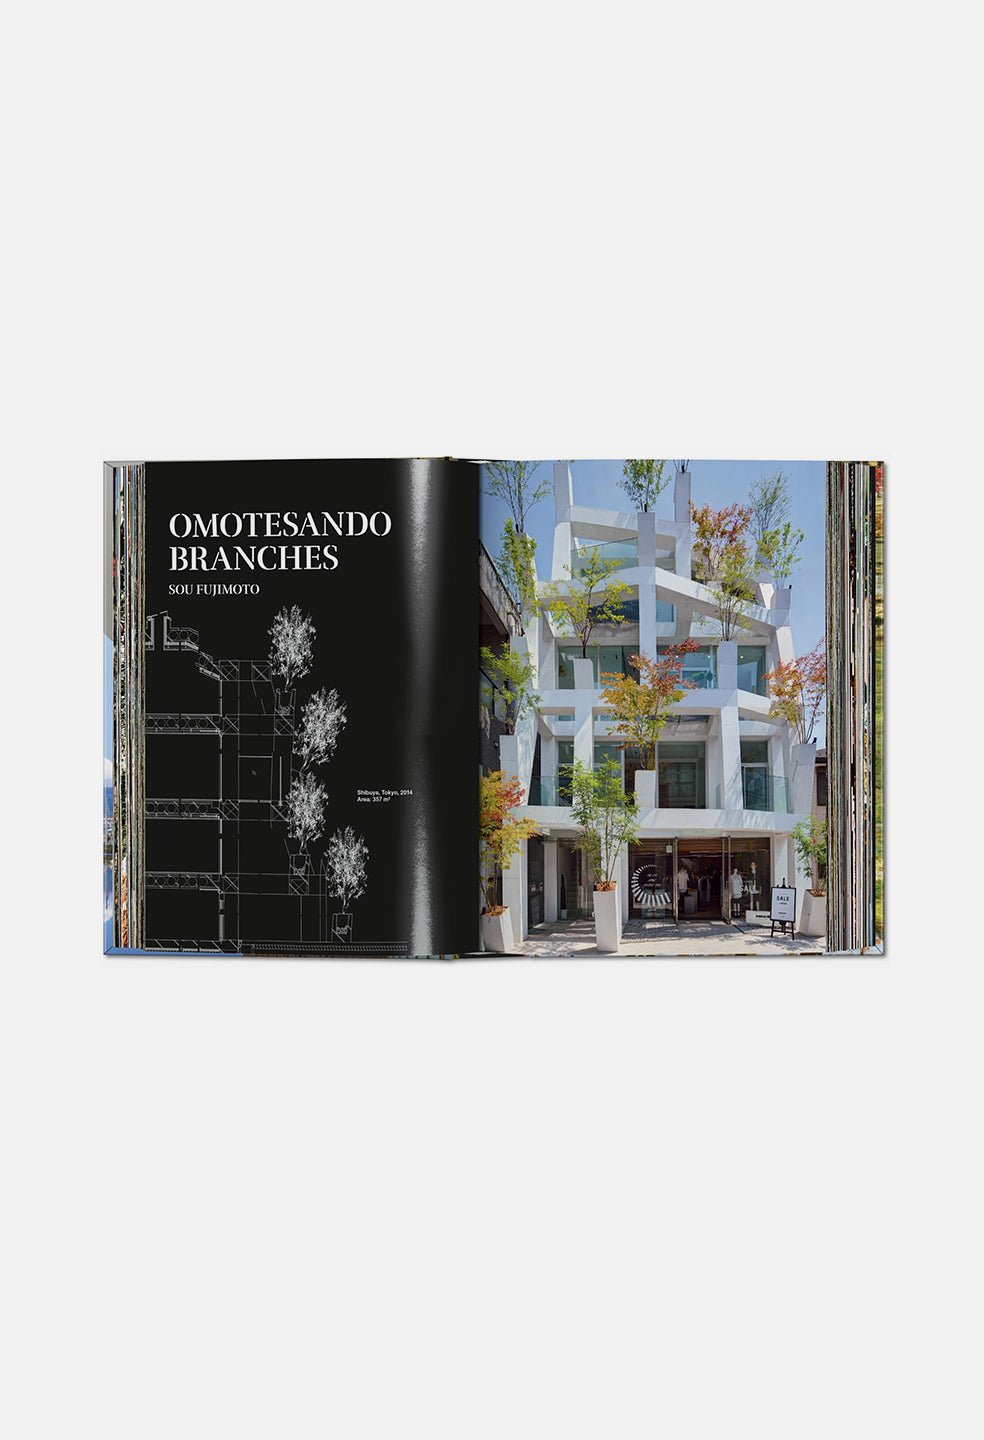 Taschen Books / Contemporary Japanese Architecture. 40th Ed.